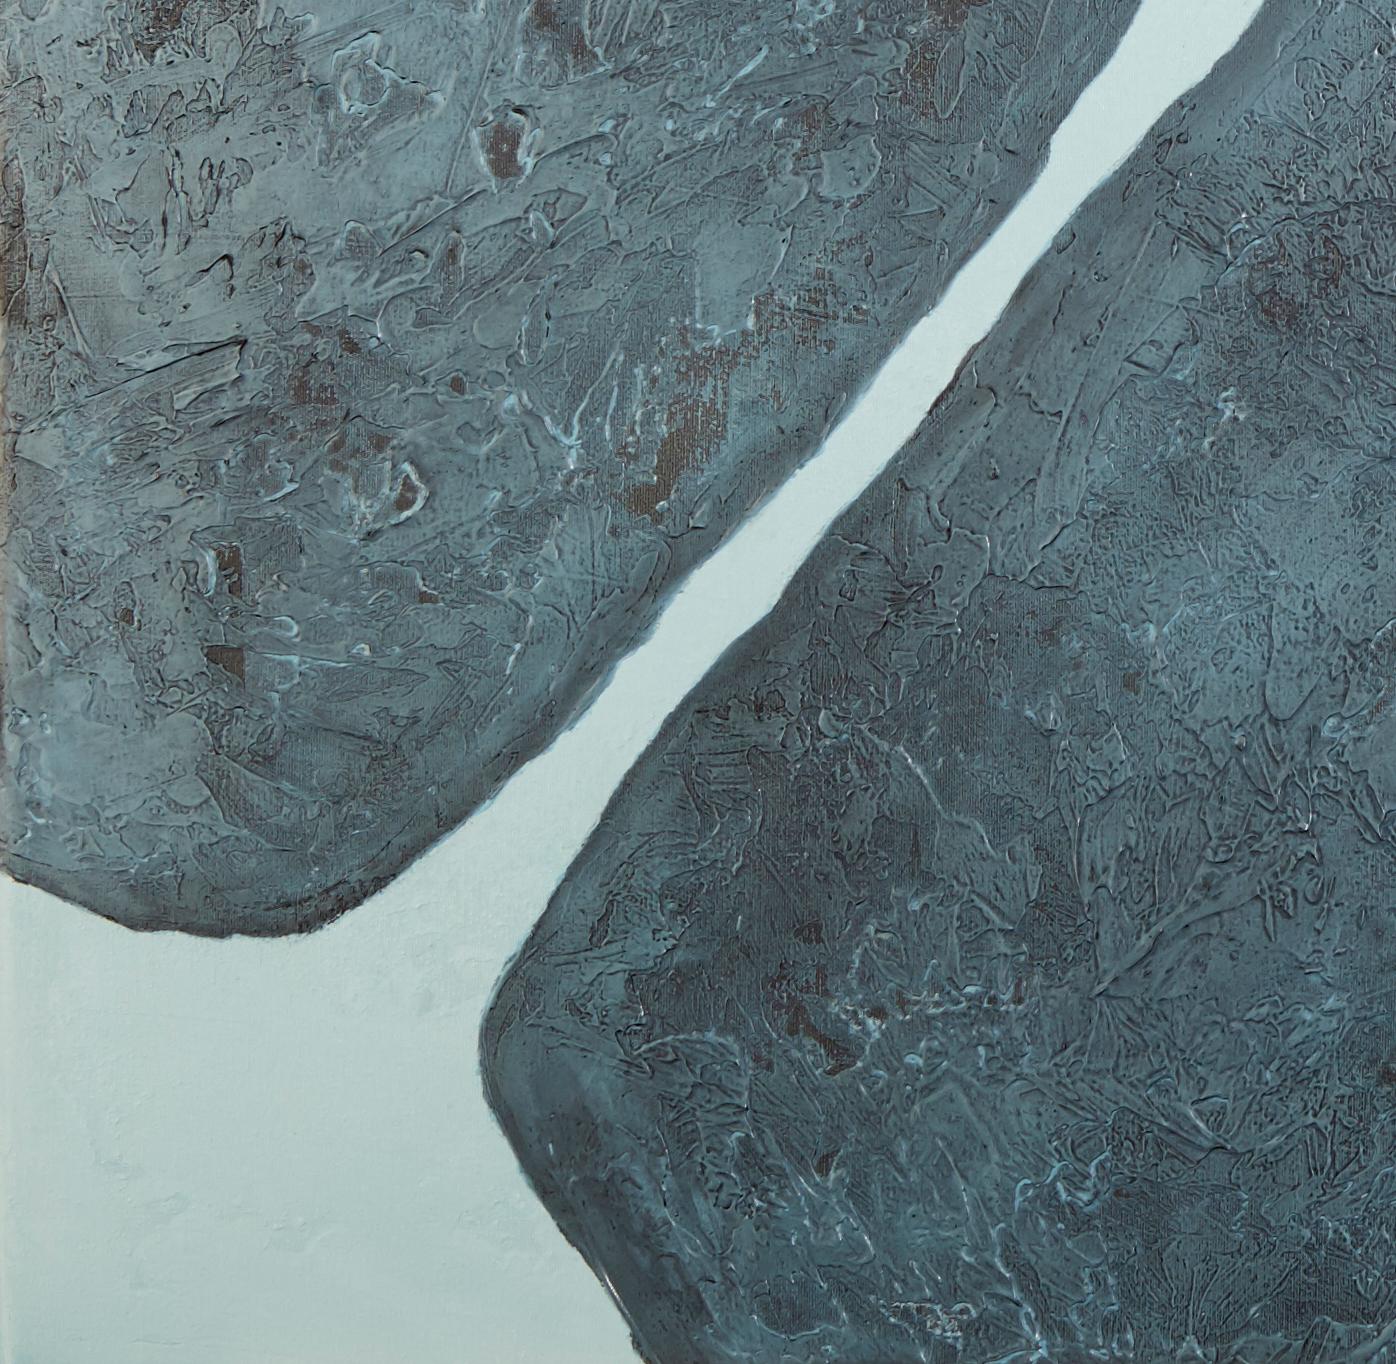 Stones XVIII - 21st Century, Contemporary, Abstract Painting, Mixed Media - Blue Landscape Painting by Jon Errazu